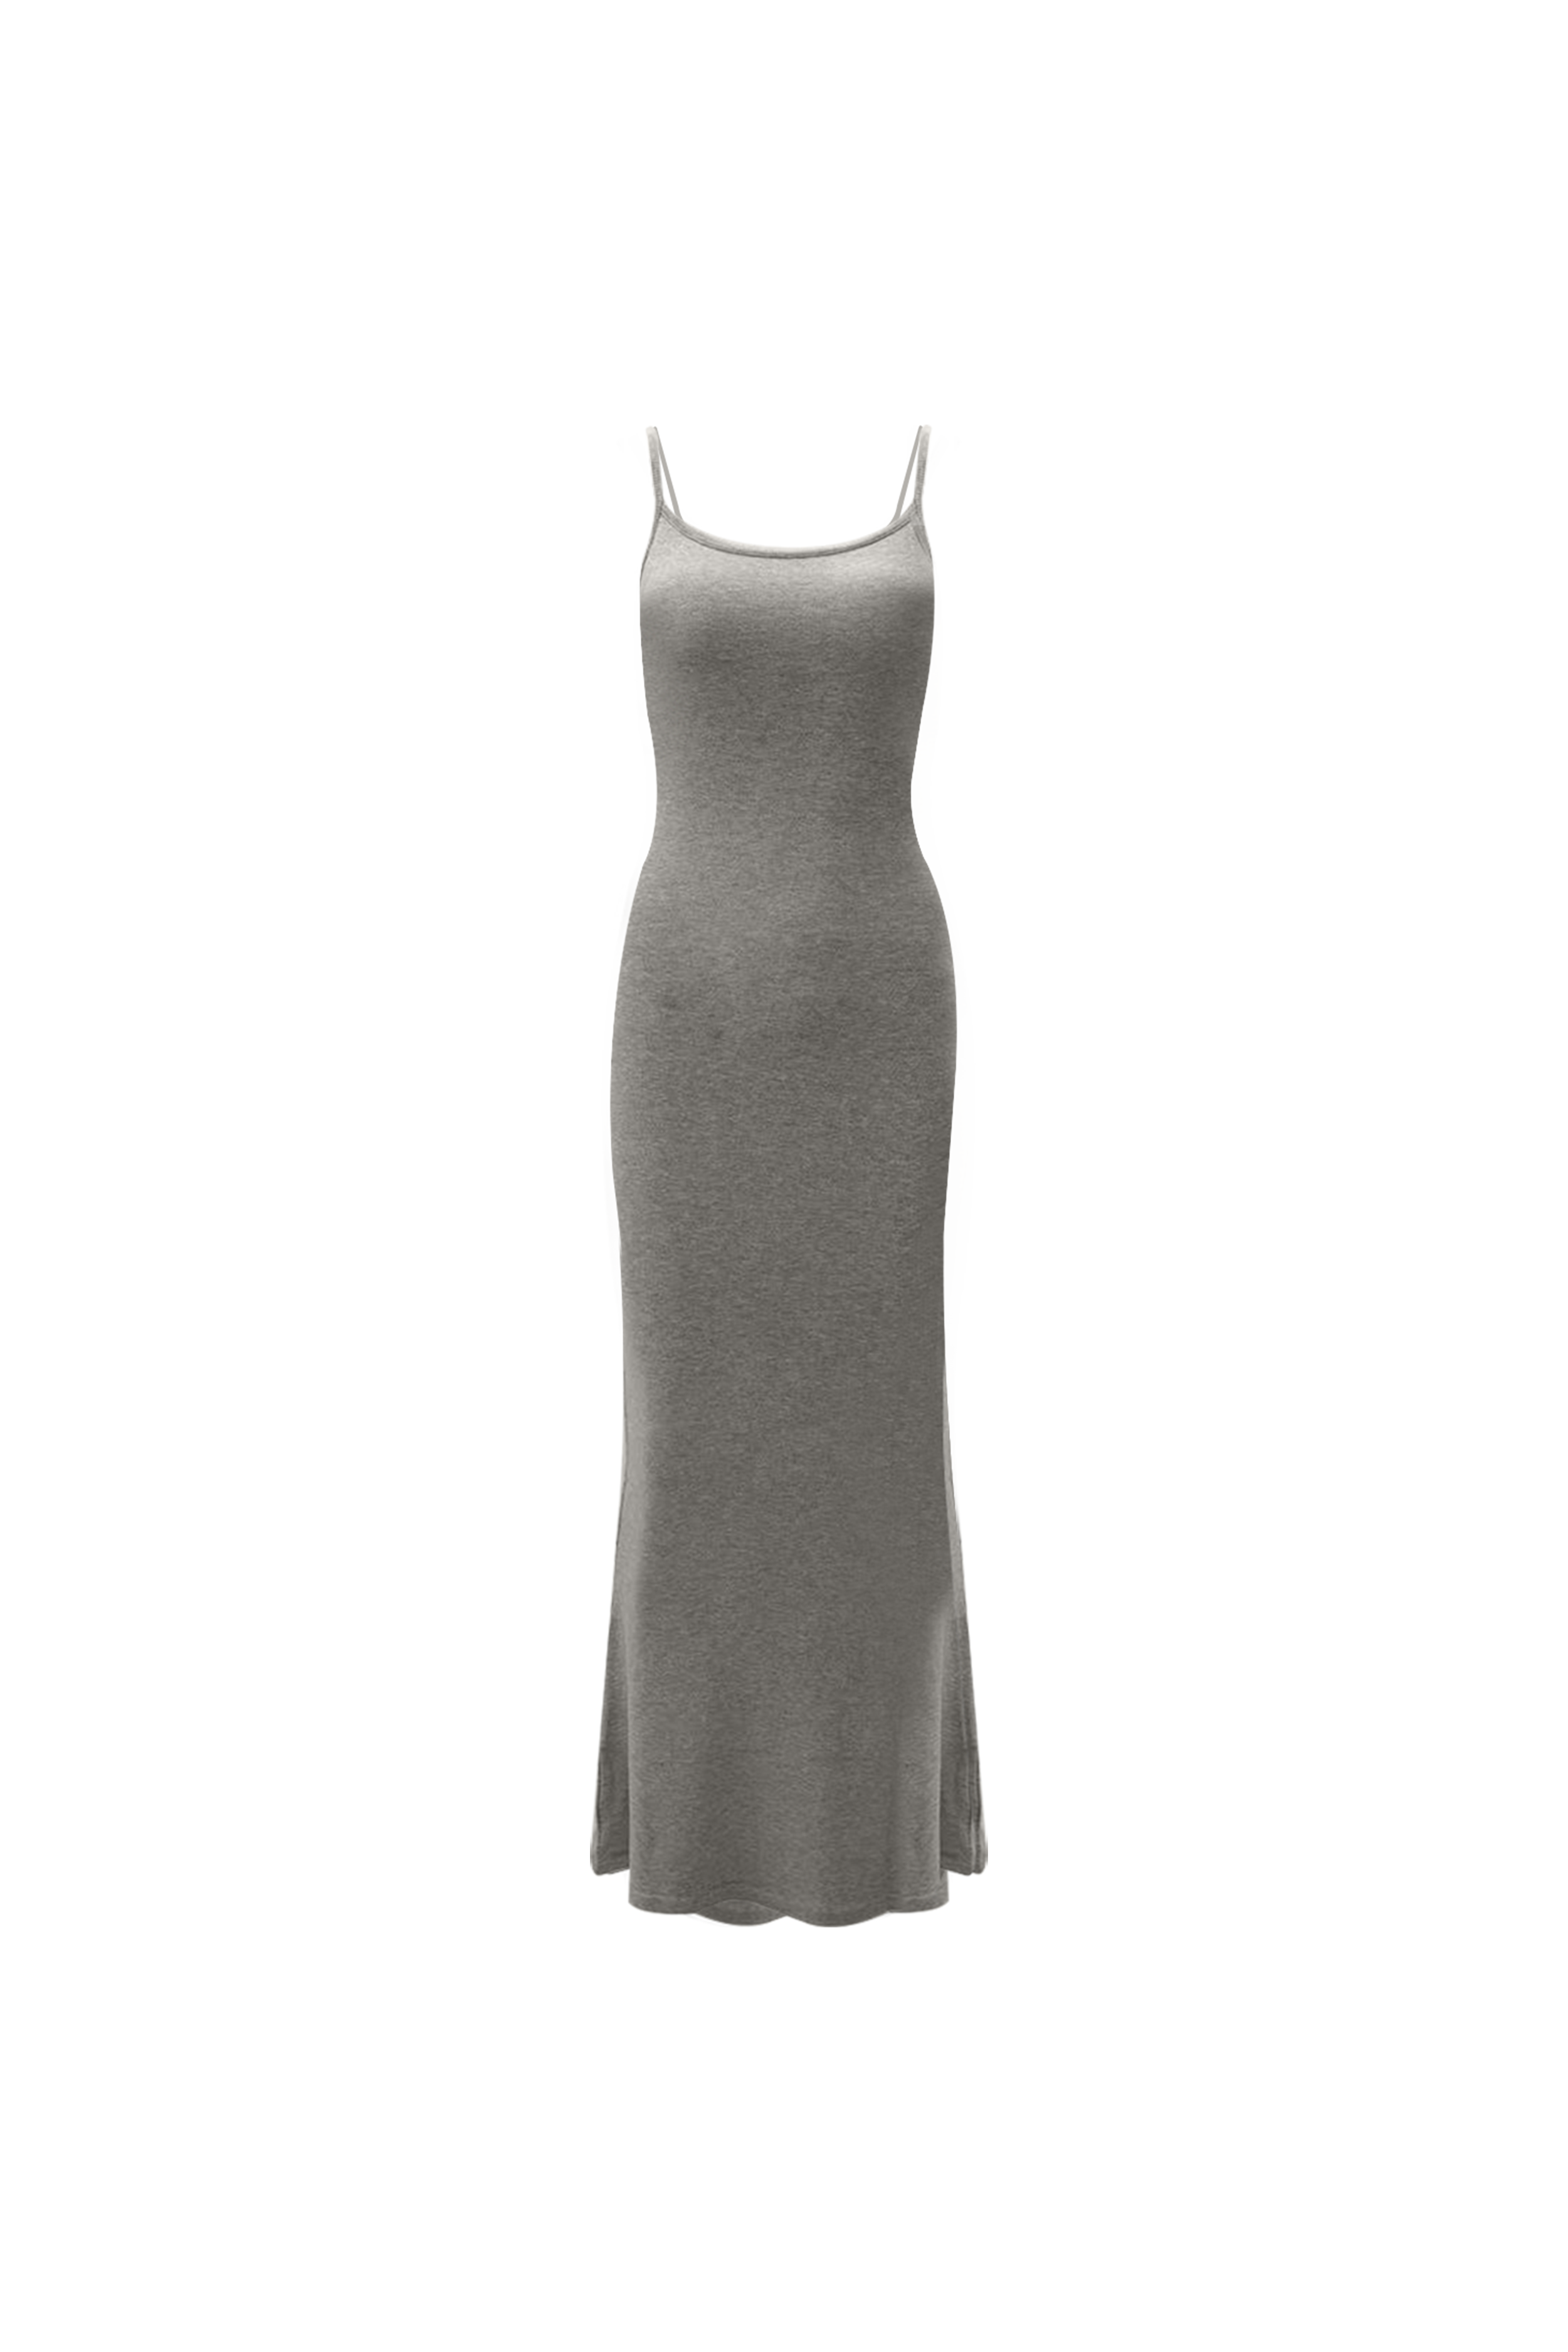 LUNA Dress in Grey Heather